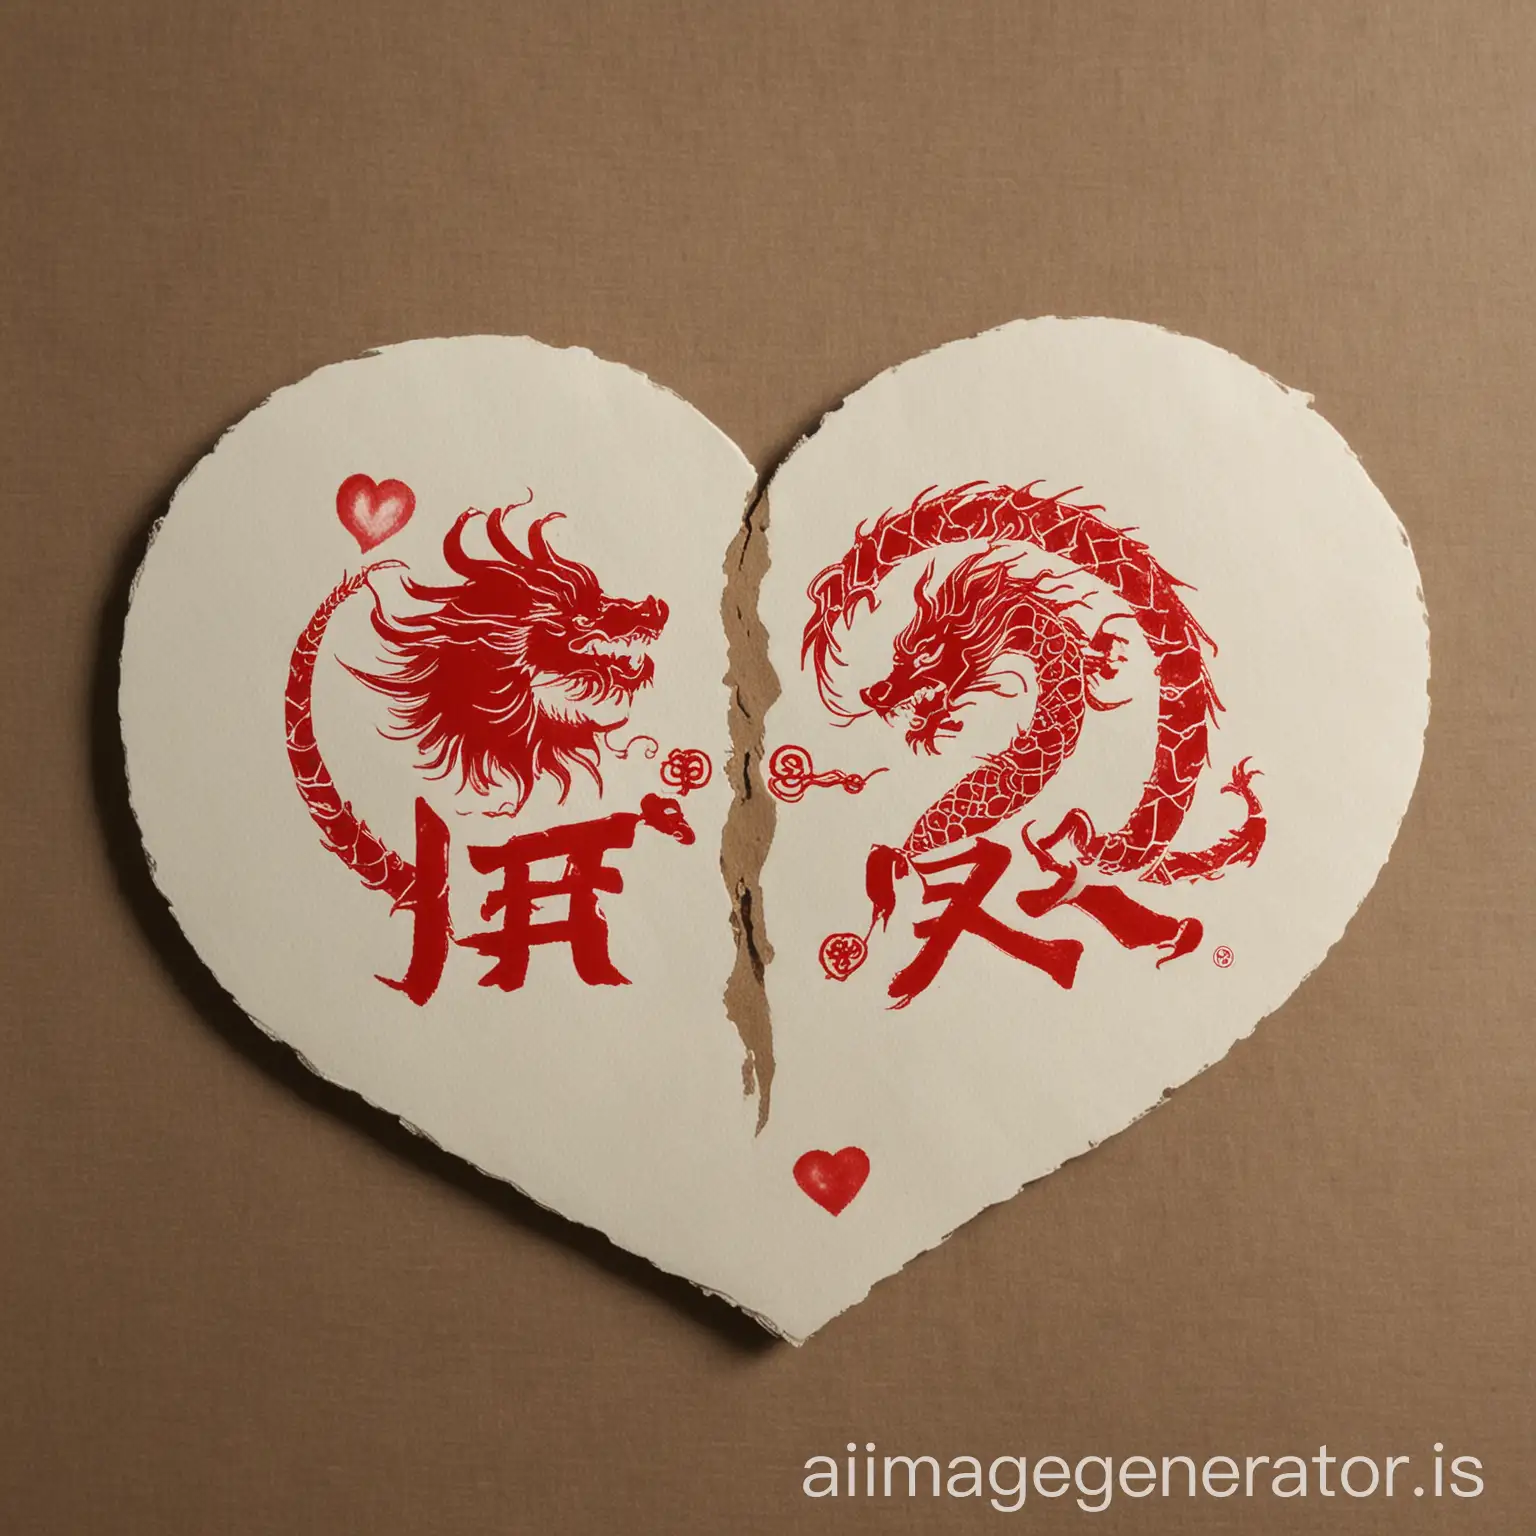 Love heart image, left side writes Qing Mei, right side writes Shao Long, left side has a heart, right side has a dragon